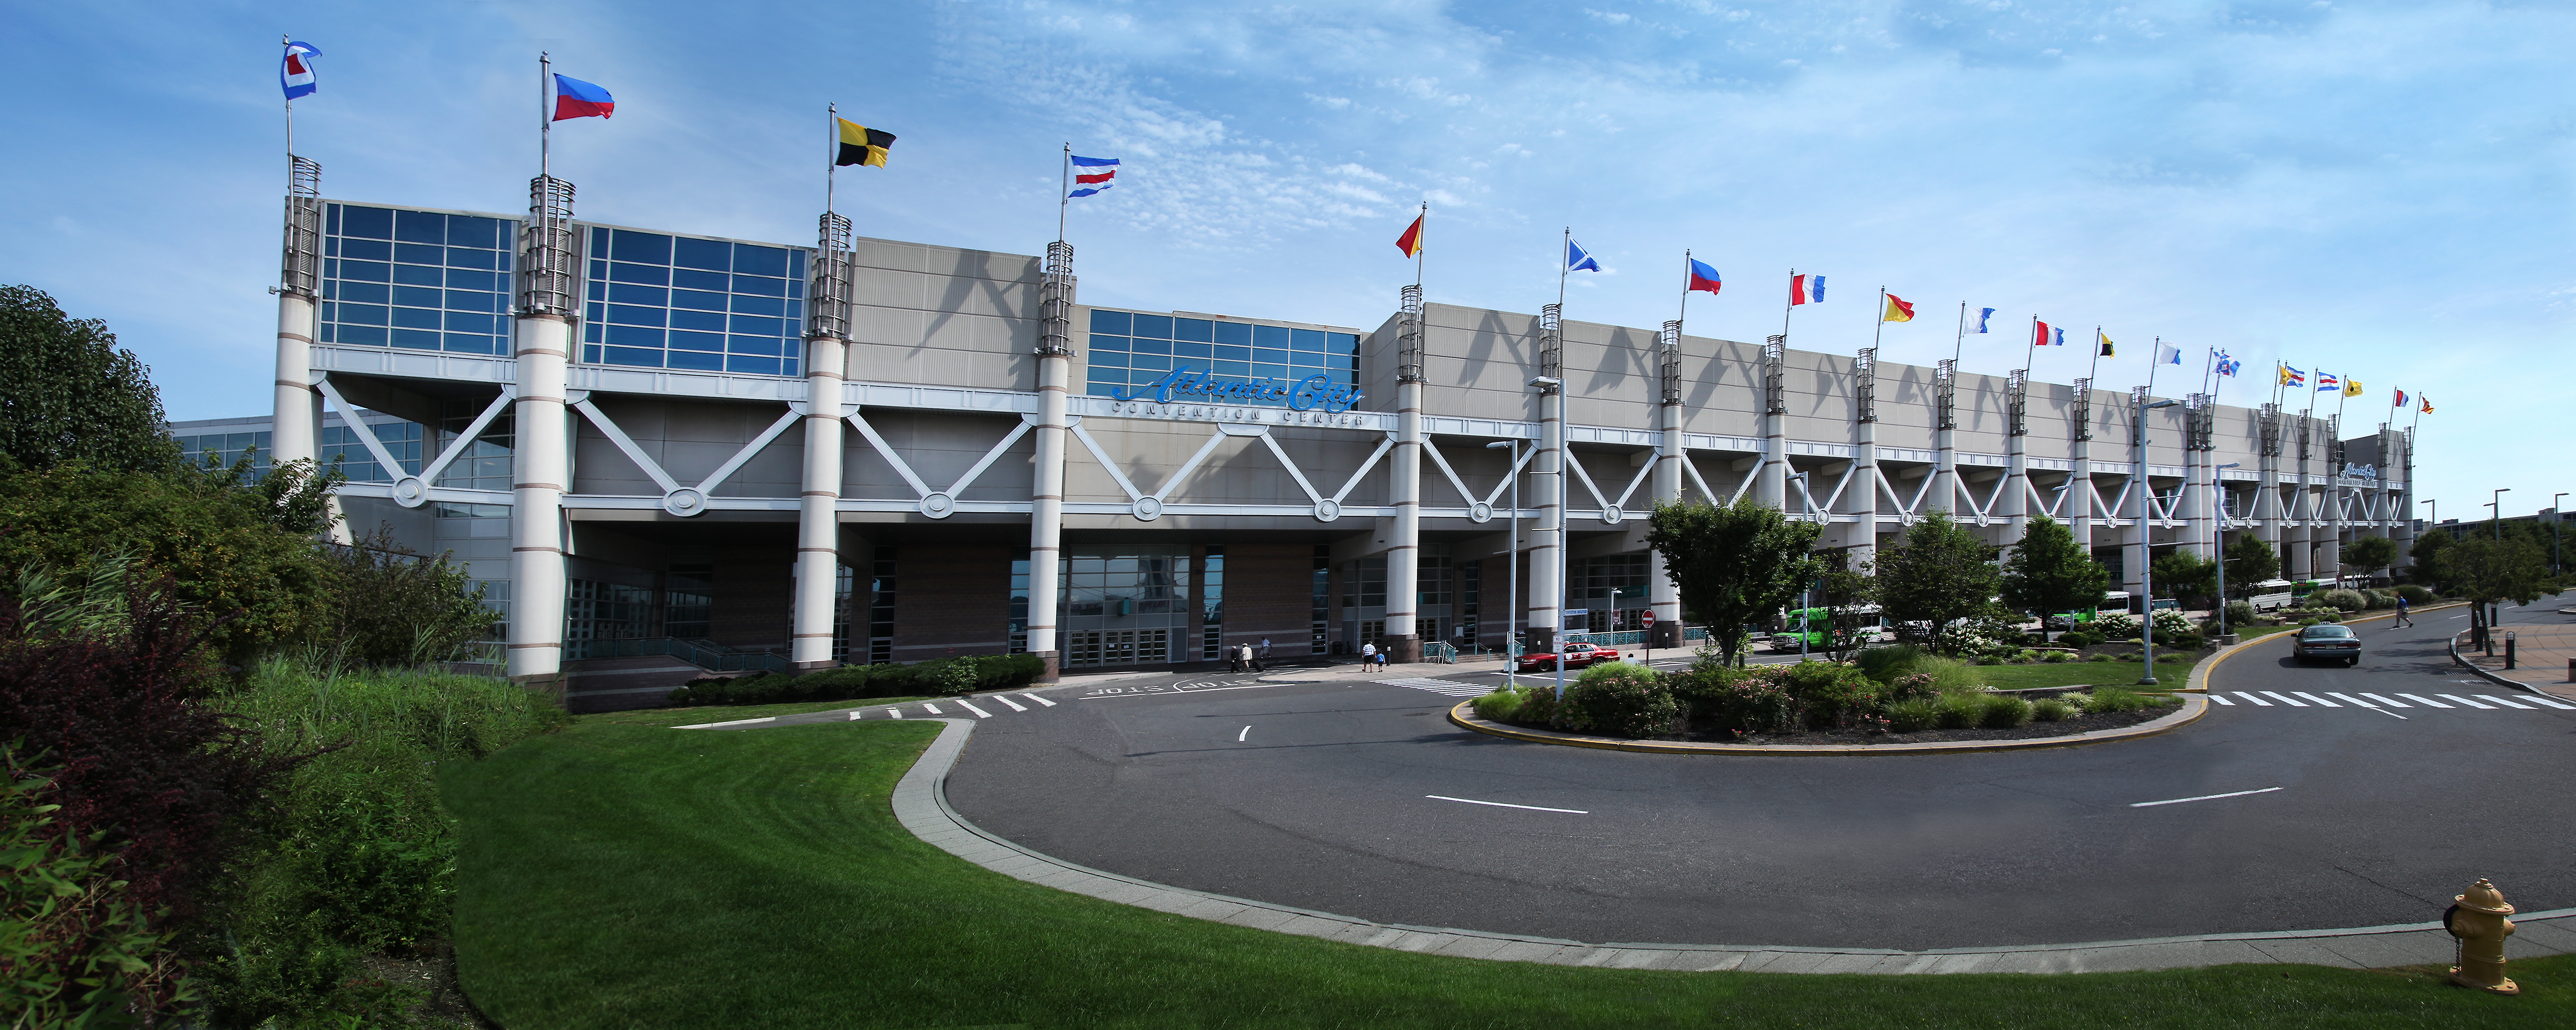 Atlantic City Convention Center